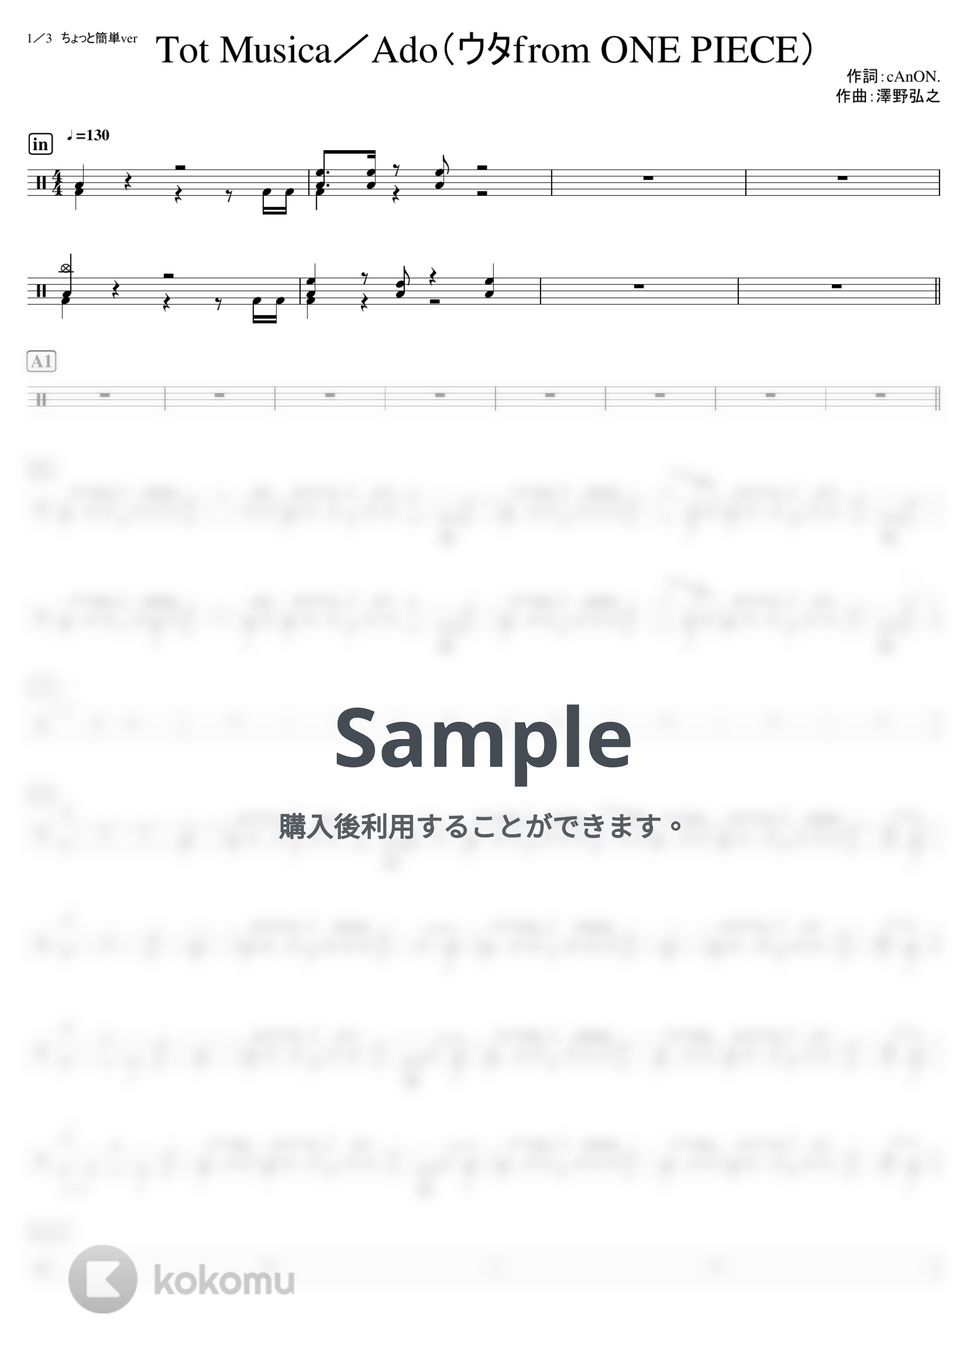 Ado (ウタfrom ONE PIECE) - Tot Musica (中級) by kamishinjo-drum-school